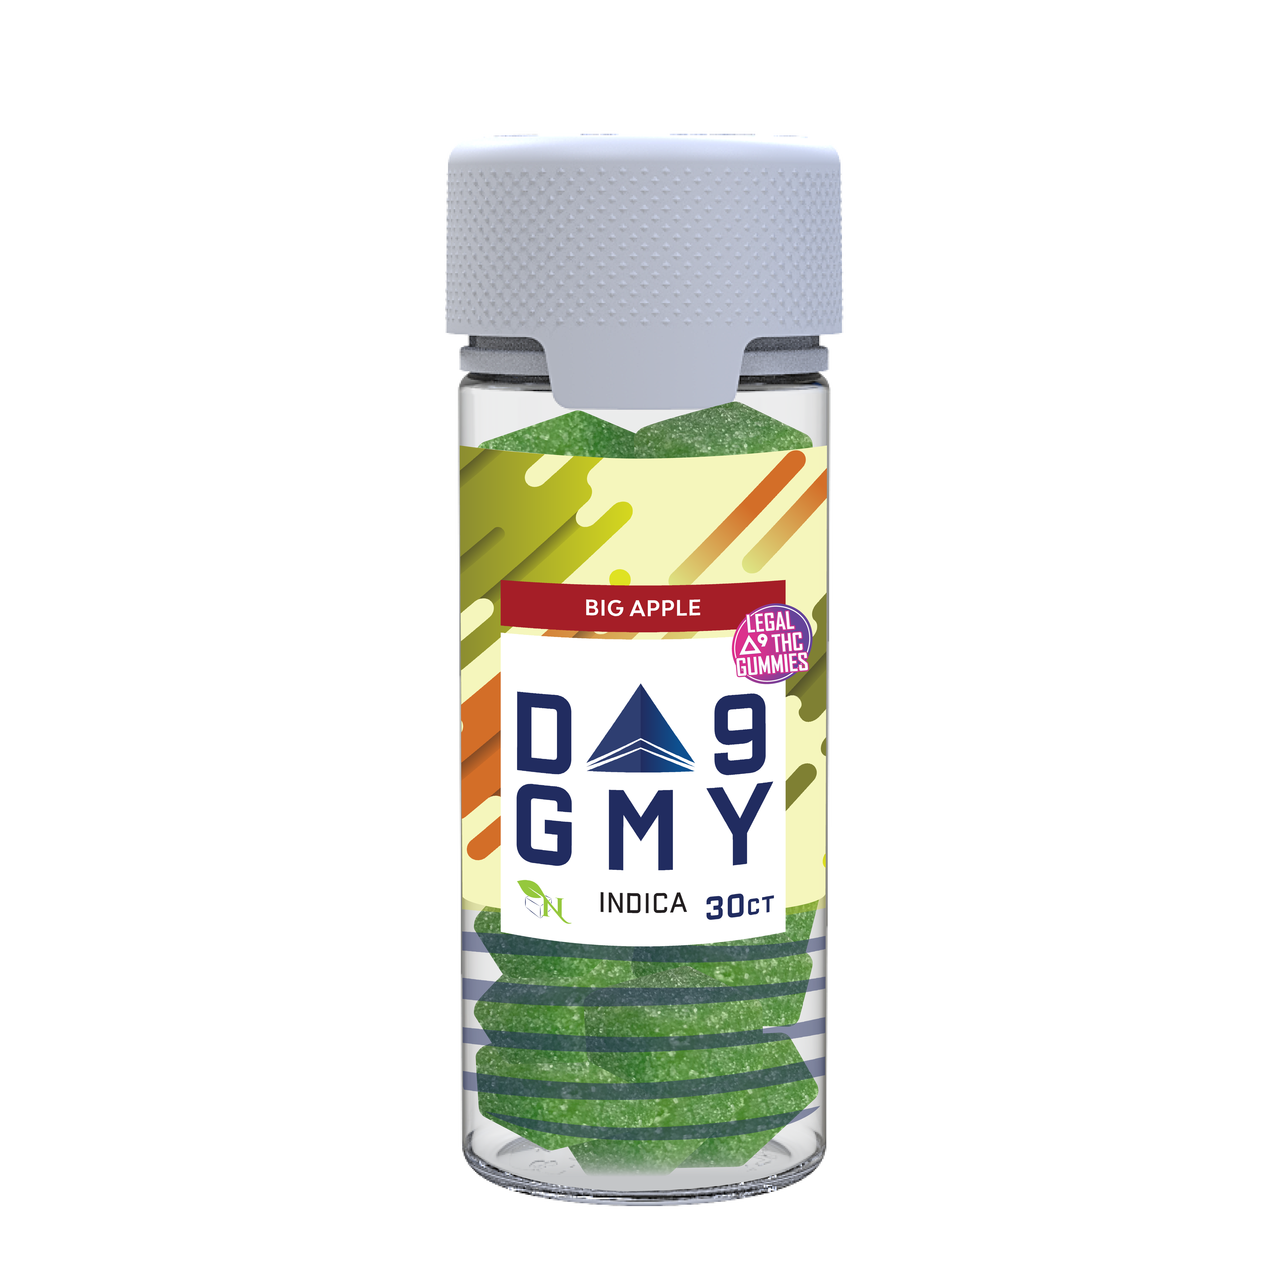 D9 GMY Delta-9 THC Gummies | Sativa & Indica